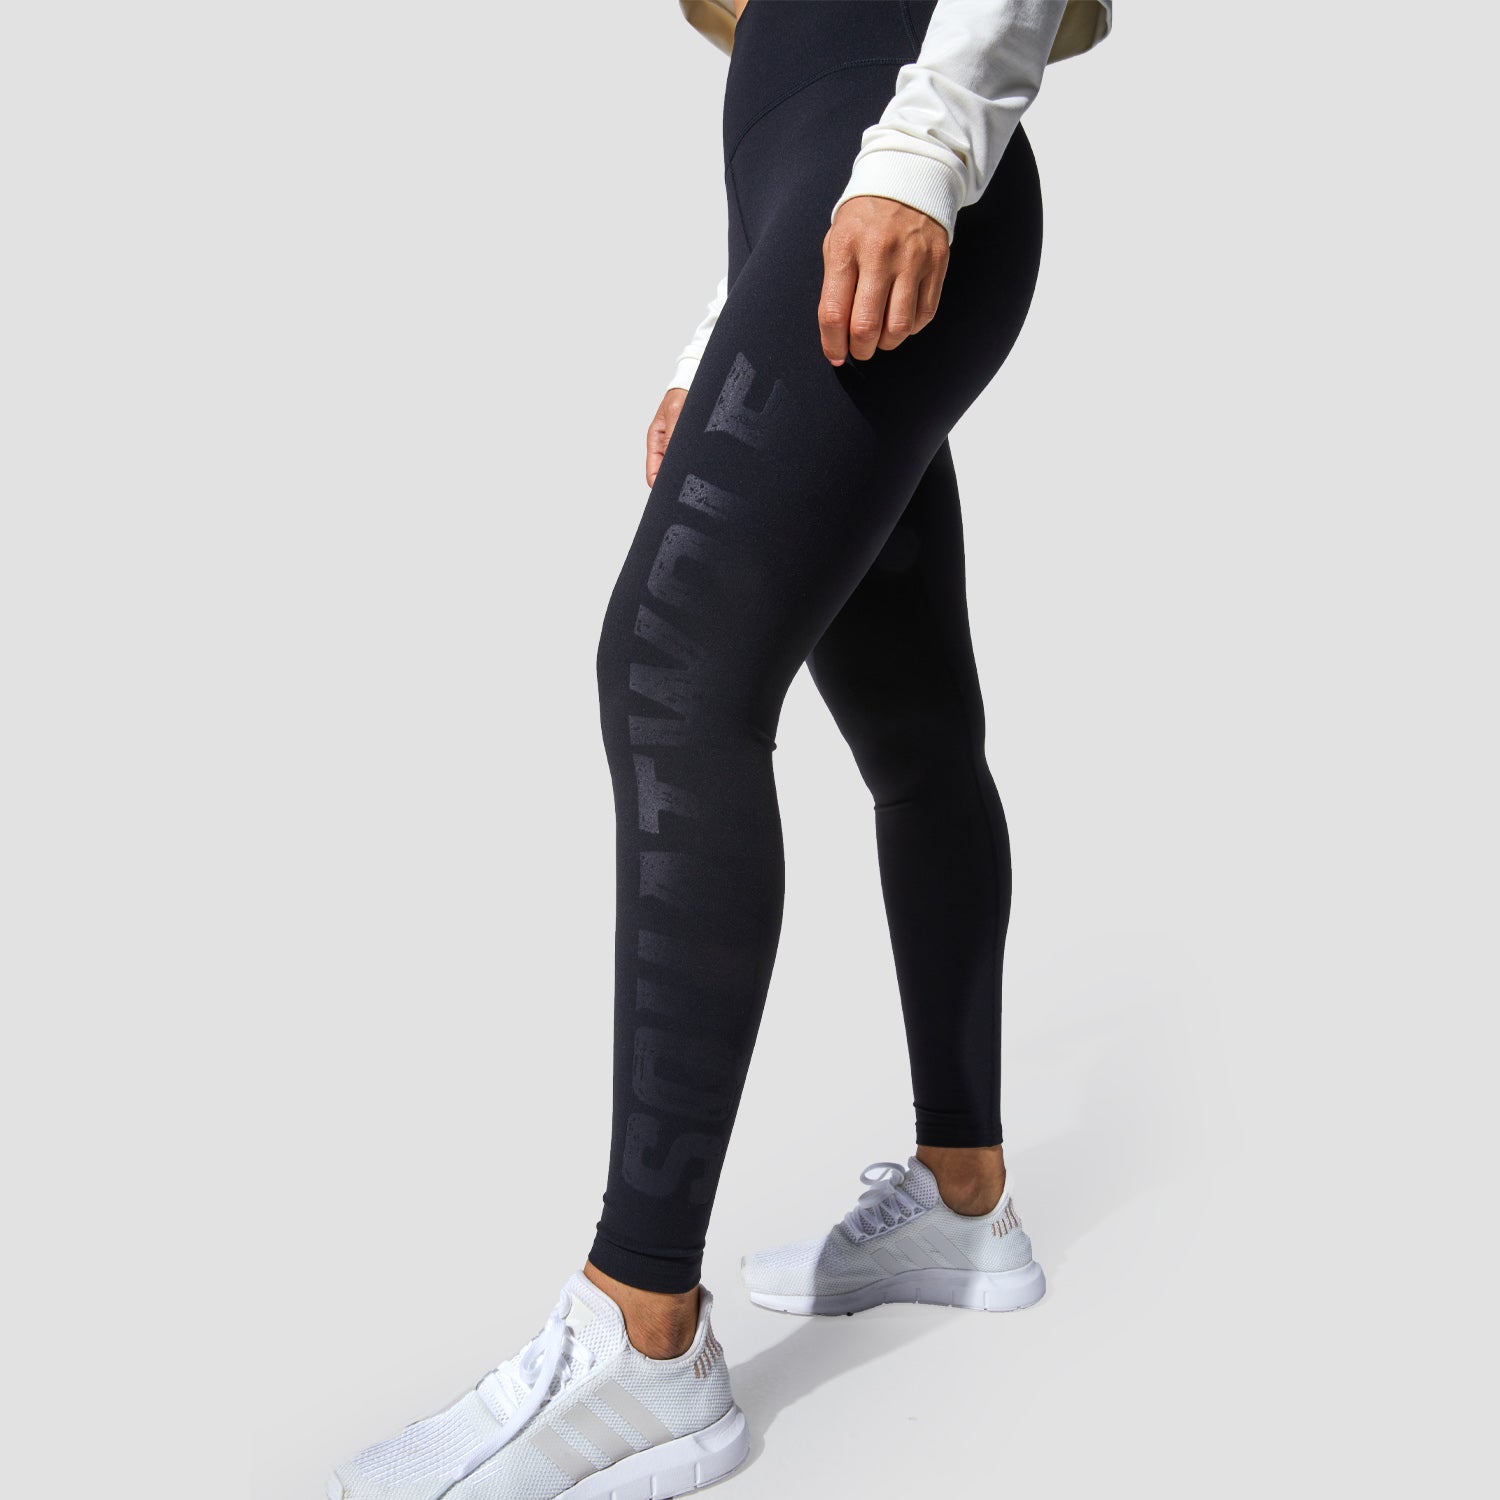 AE, Graphic Wordmark Leggings - Black, Workout Leggings Women